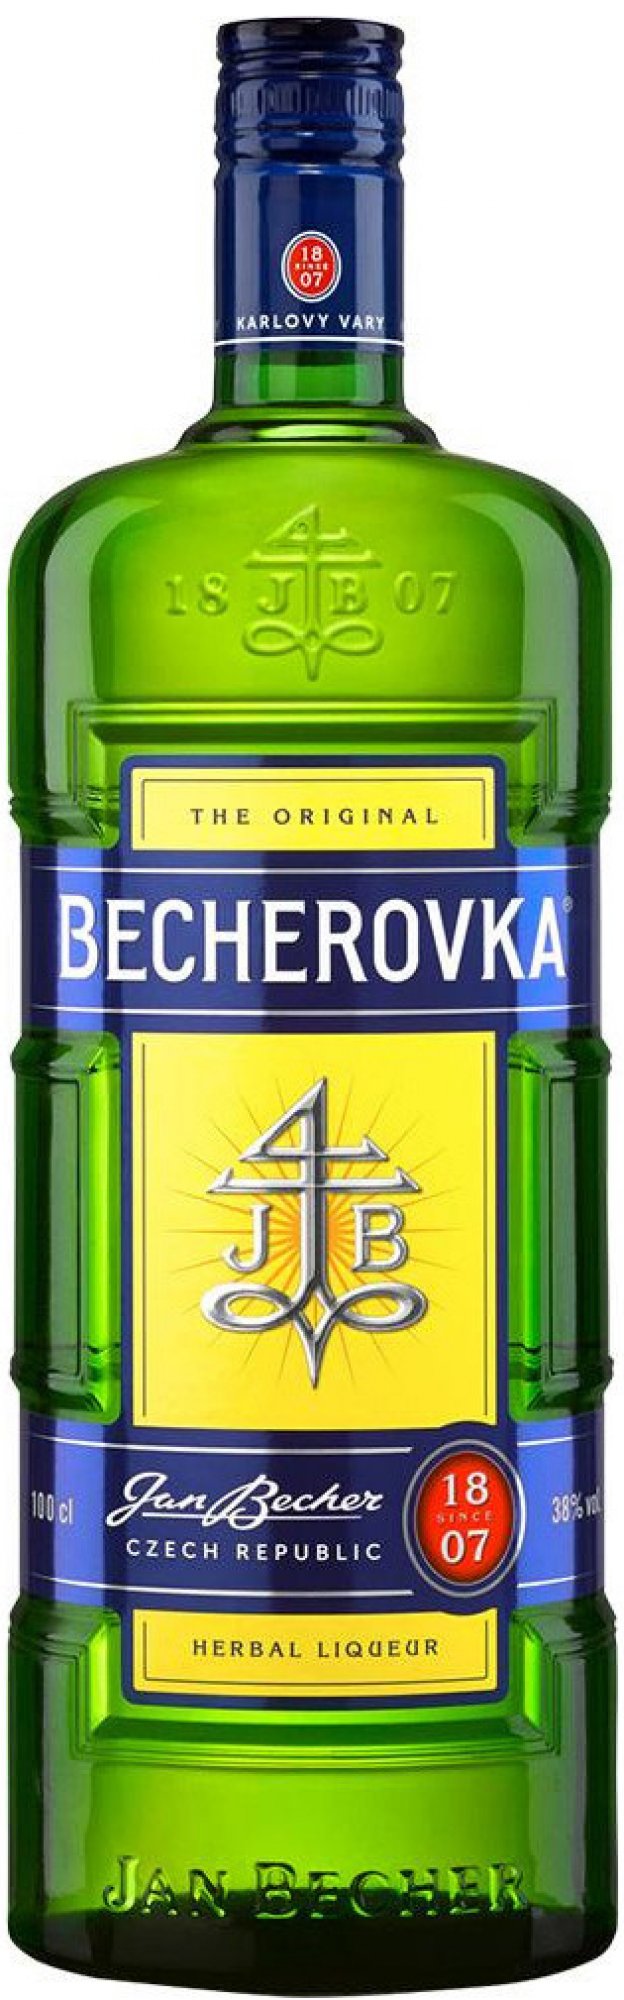 Becherovka Original 38% 0,7 l (čistá fľaša)